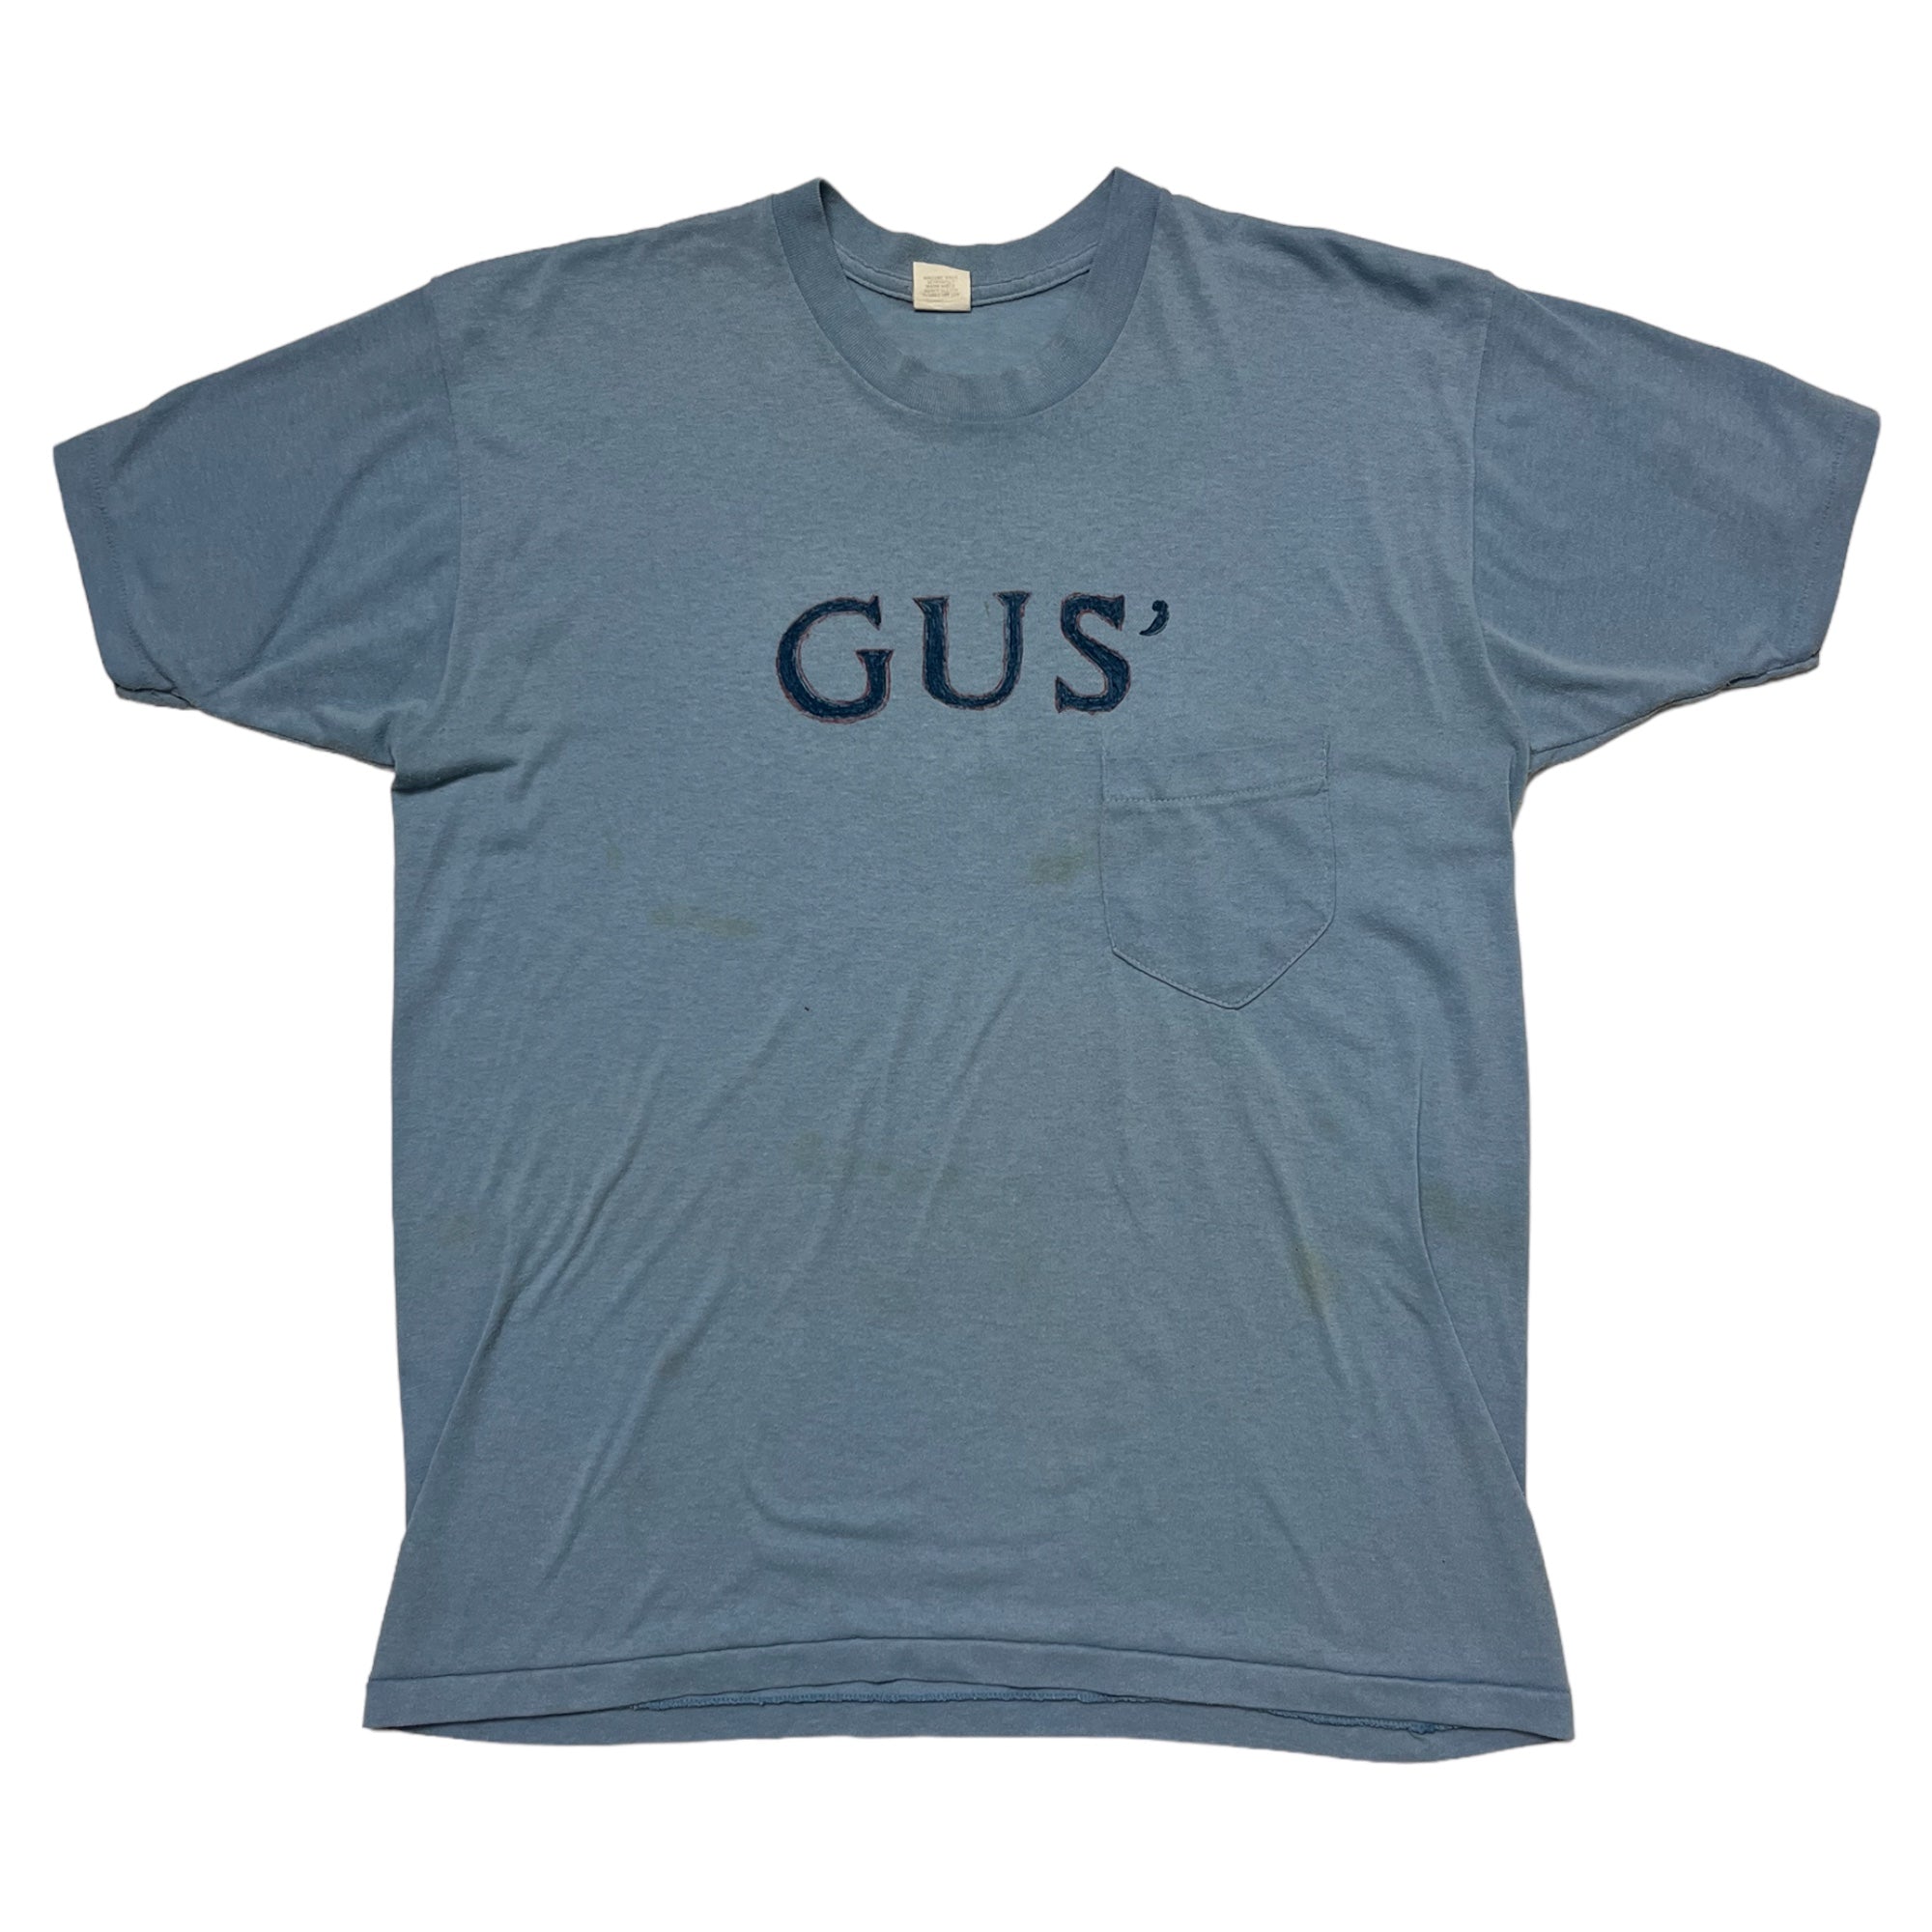 1970s Hand-Drawn ‘Gus’ Pocket T-Shirt - Light Blue - M/L